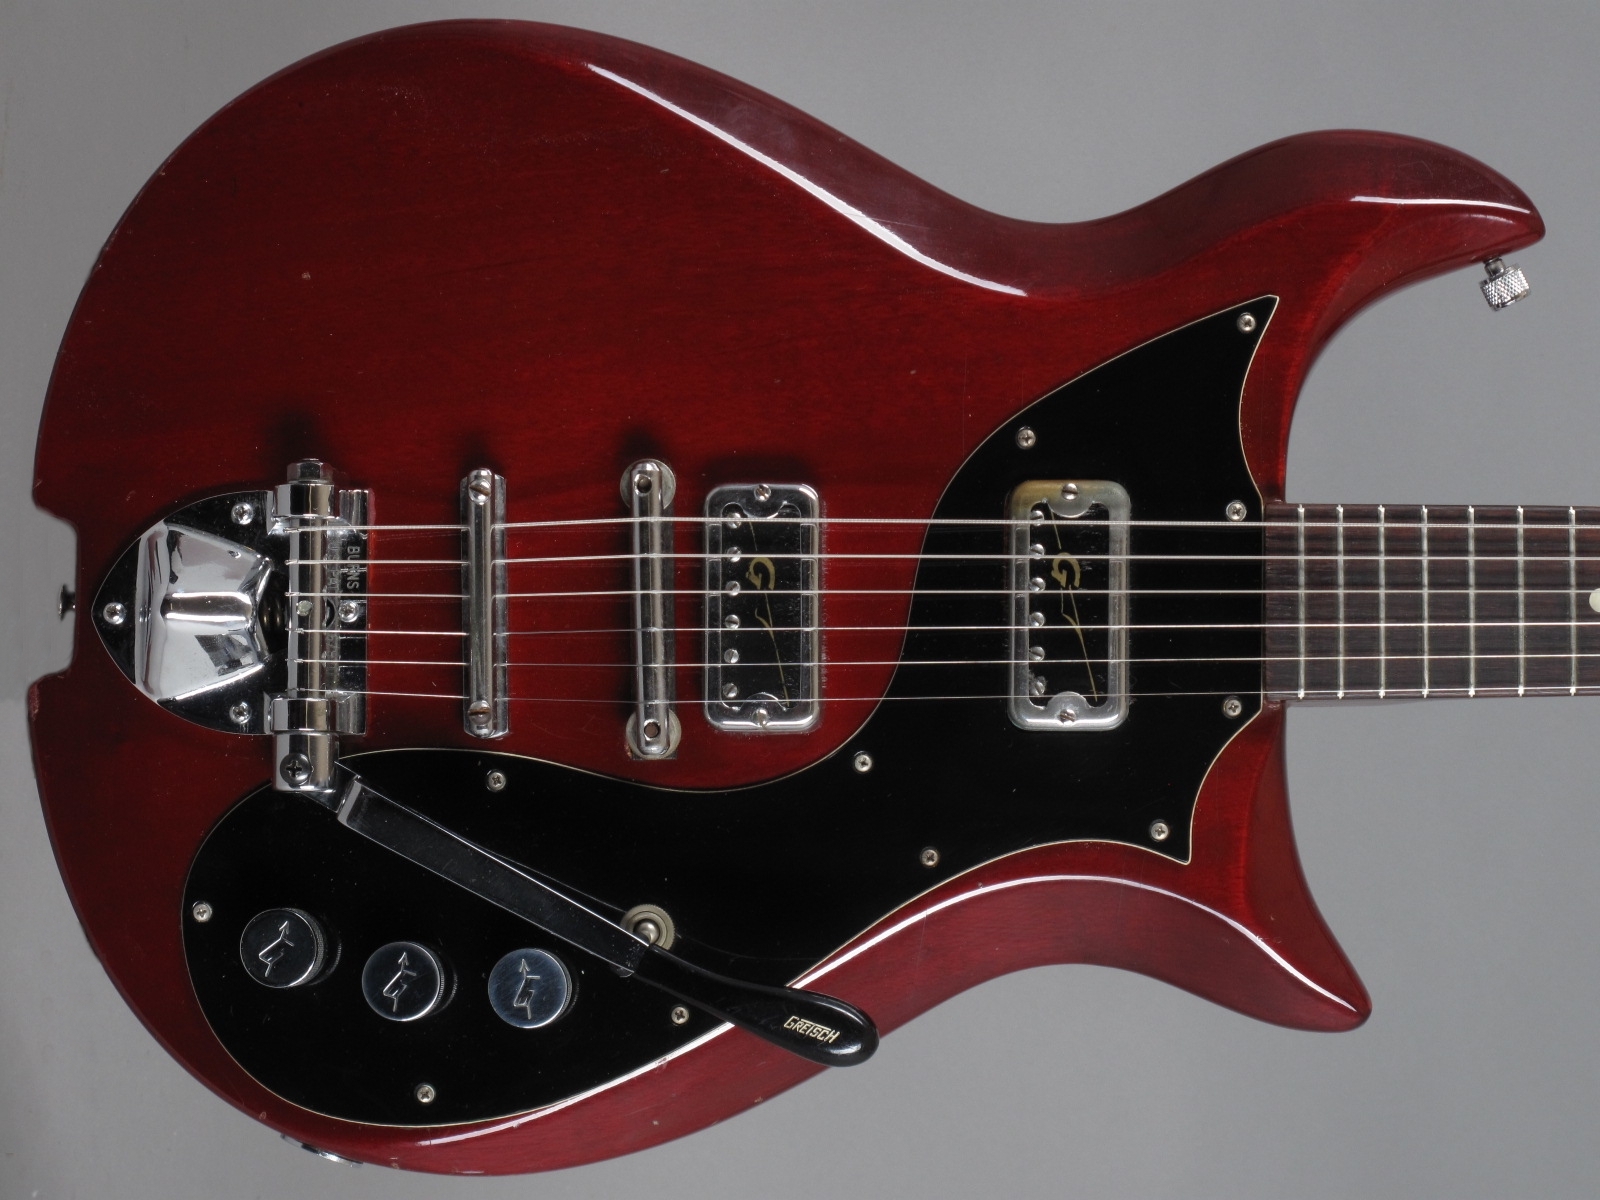 Gretsch 6135 Corvette 1964 Cherry Guitar For Sale GuitarPoint